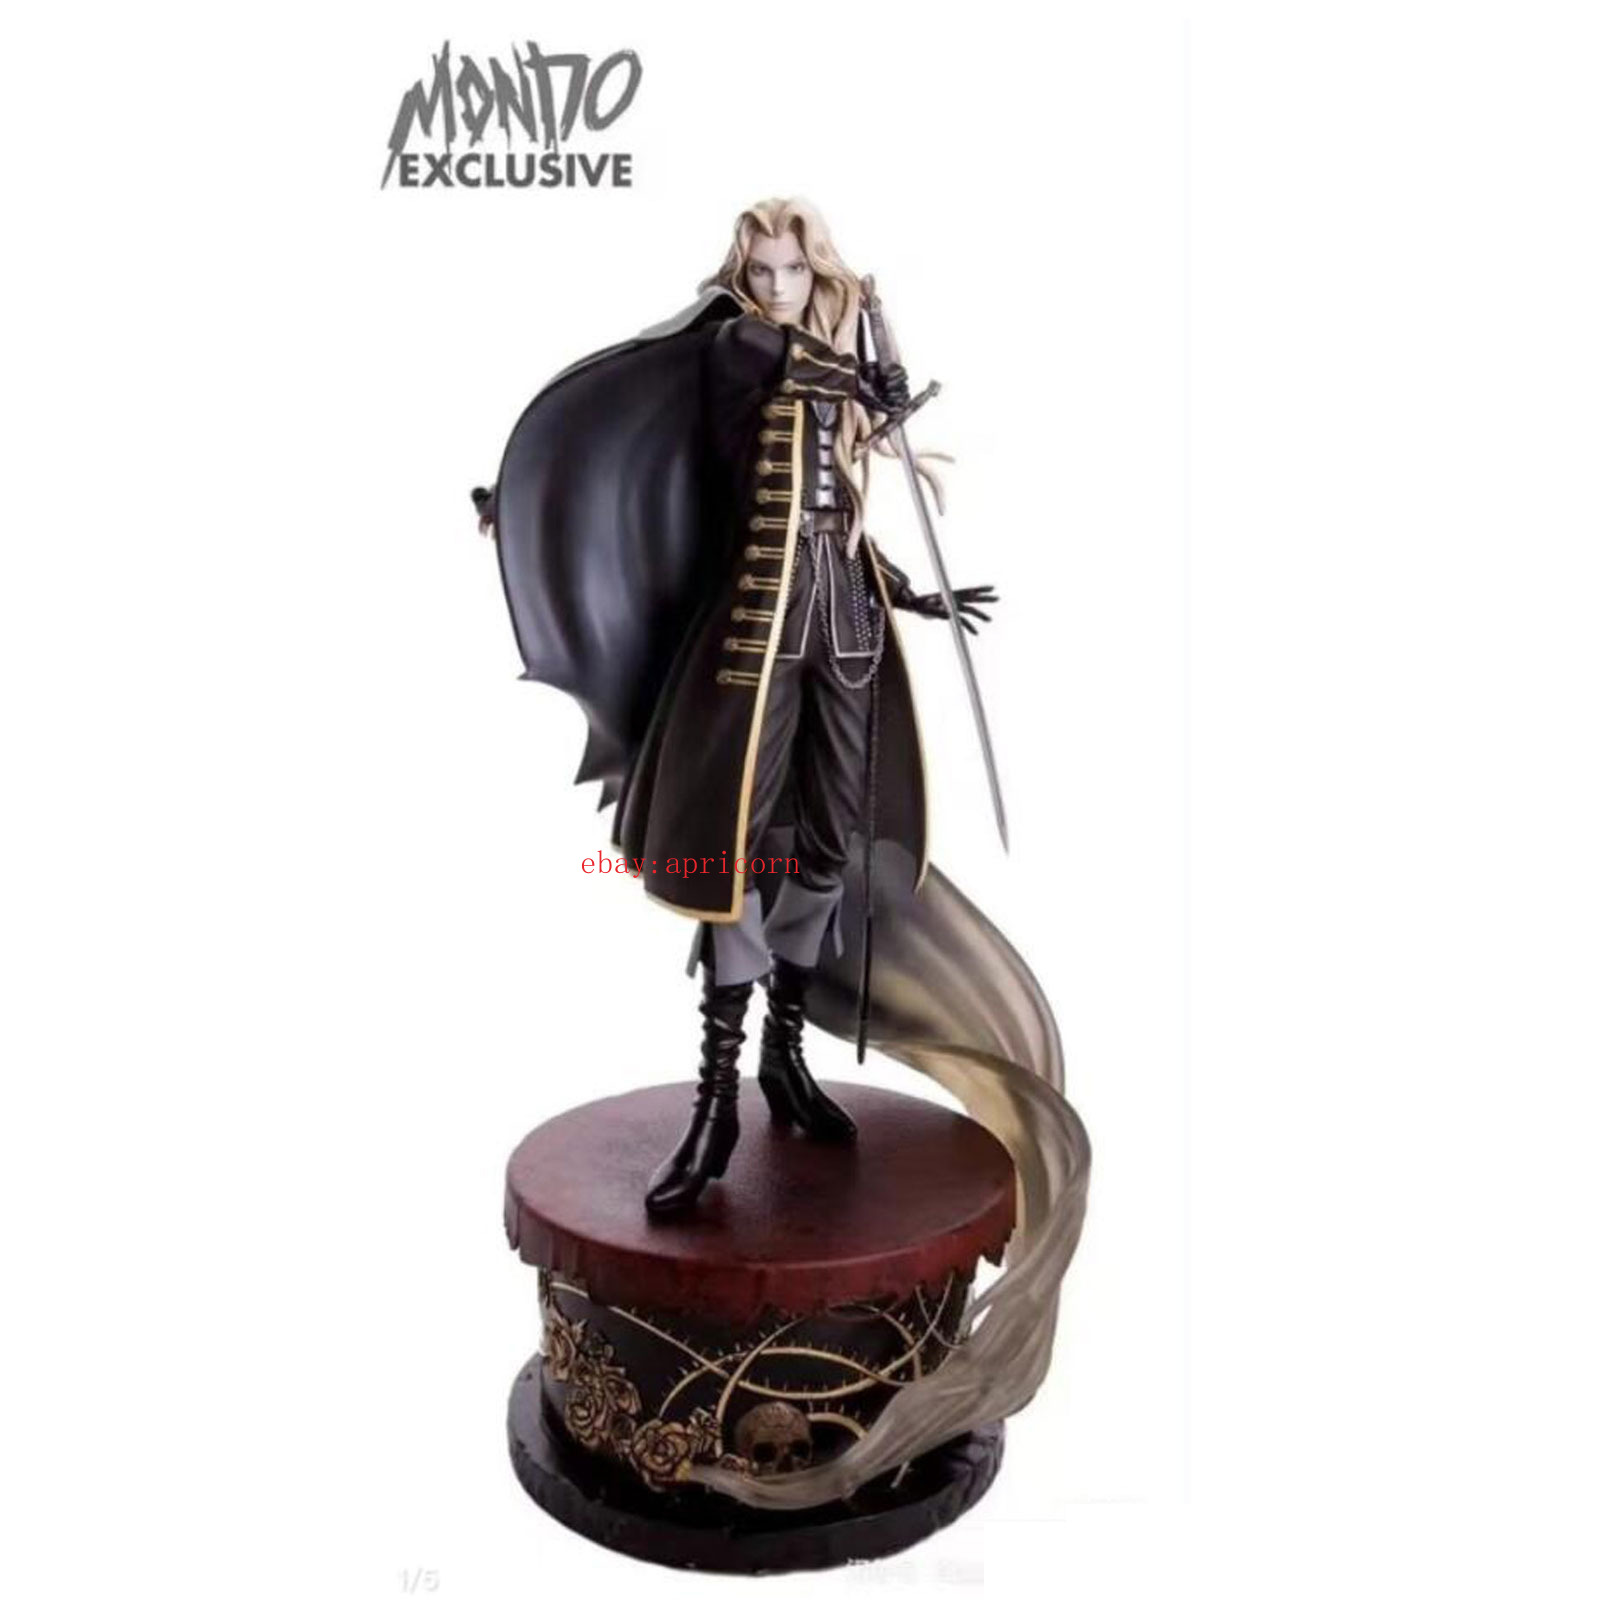 Castlevania Alucard Statue Figure Resin Model Collectible Limited Rare Boy Gift